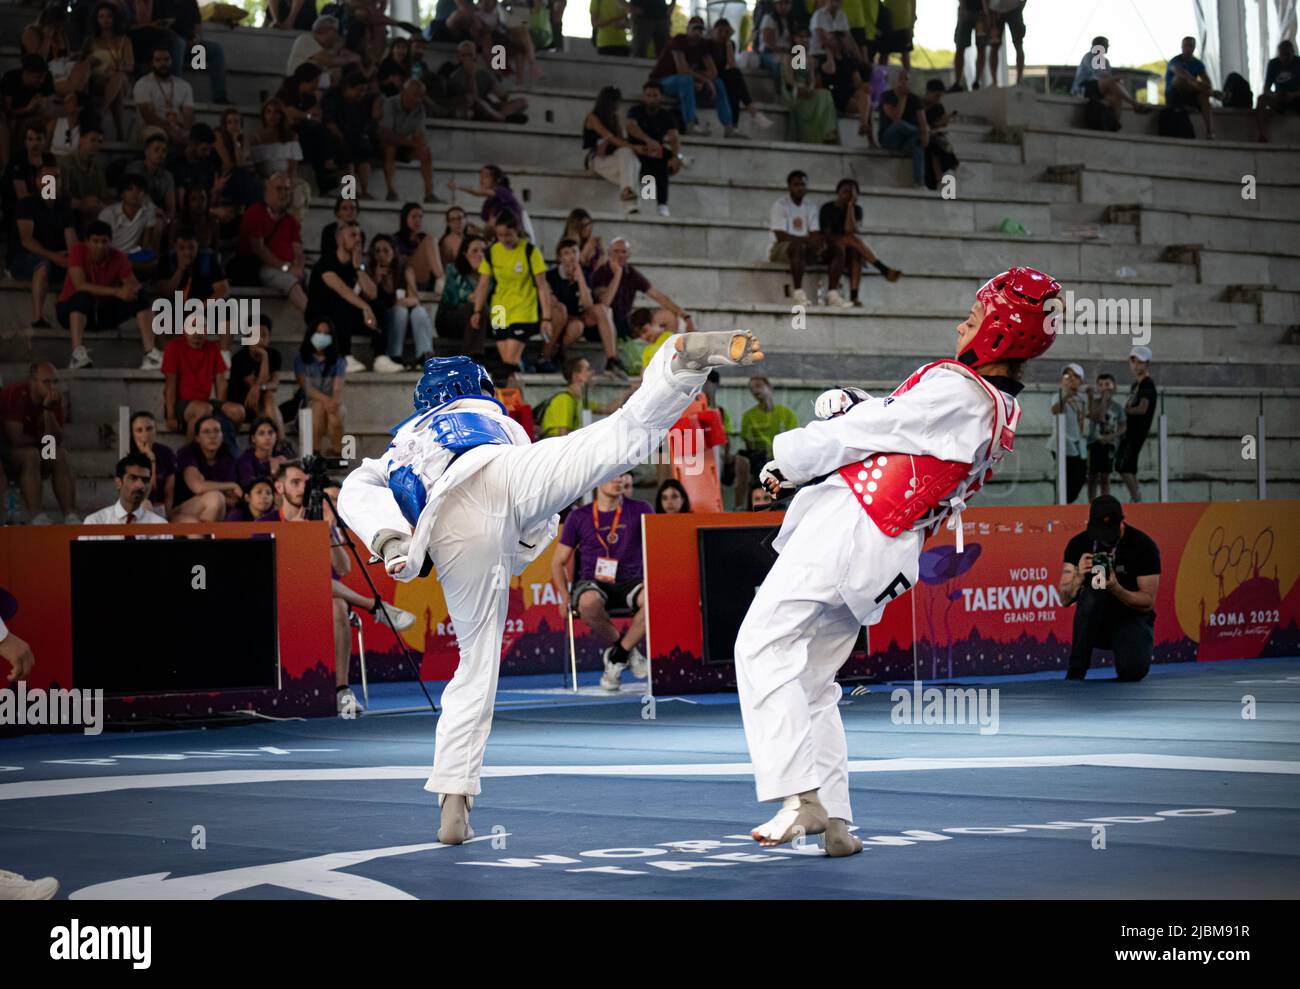 Patada femenina de luchador taekwondo durante el partido. Campeonato Mundial de Taekwondo, Roma, Italia, junio de 4 2022 Foto de stock